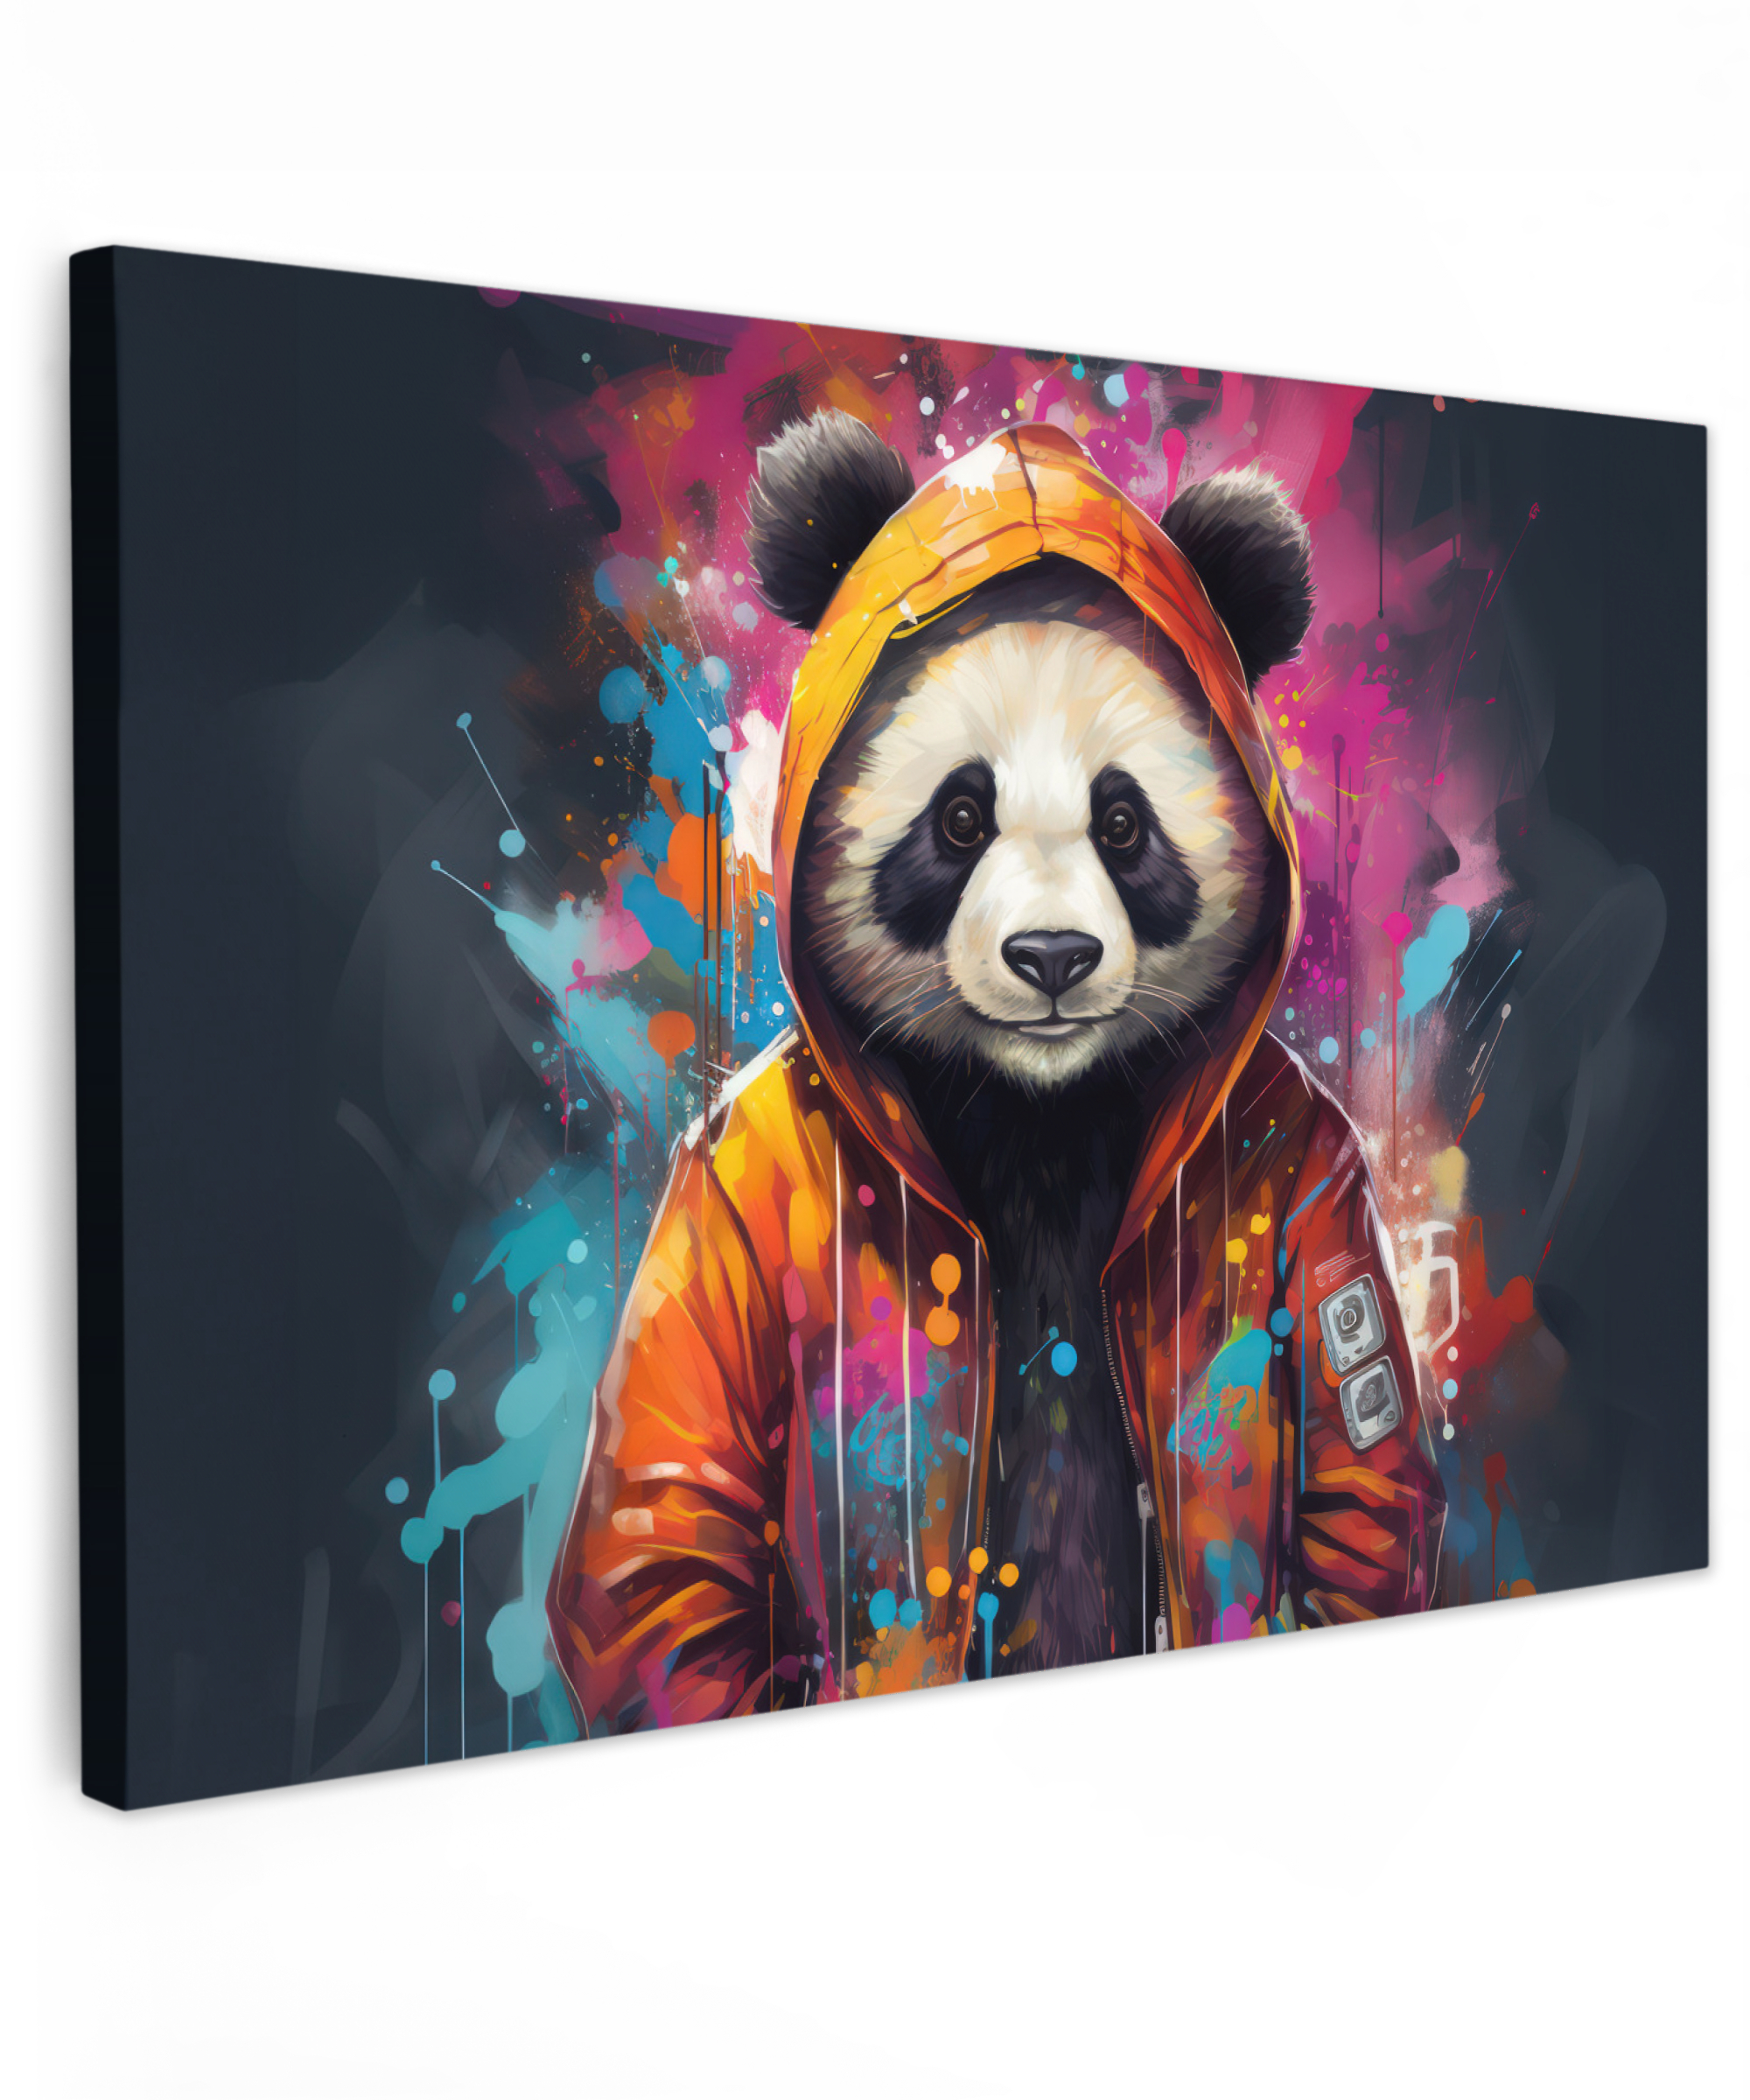 Canvas schilderij - Panda - Jas - Graffiti - Oranje